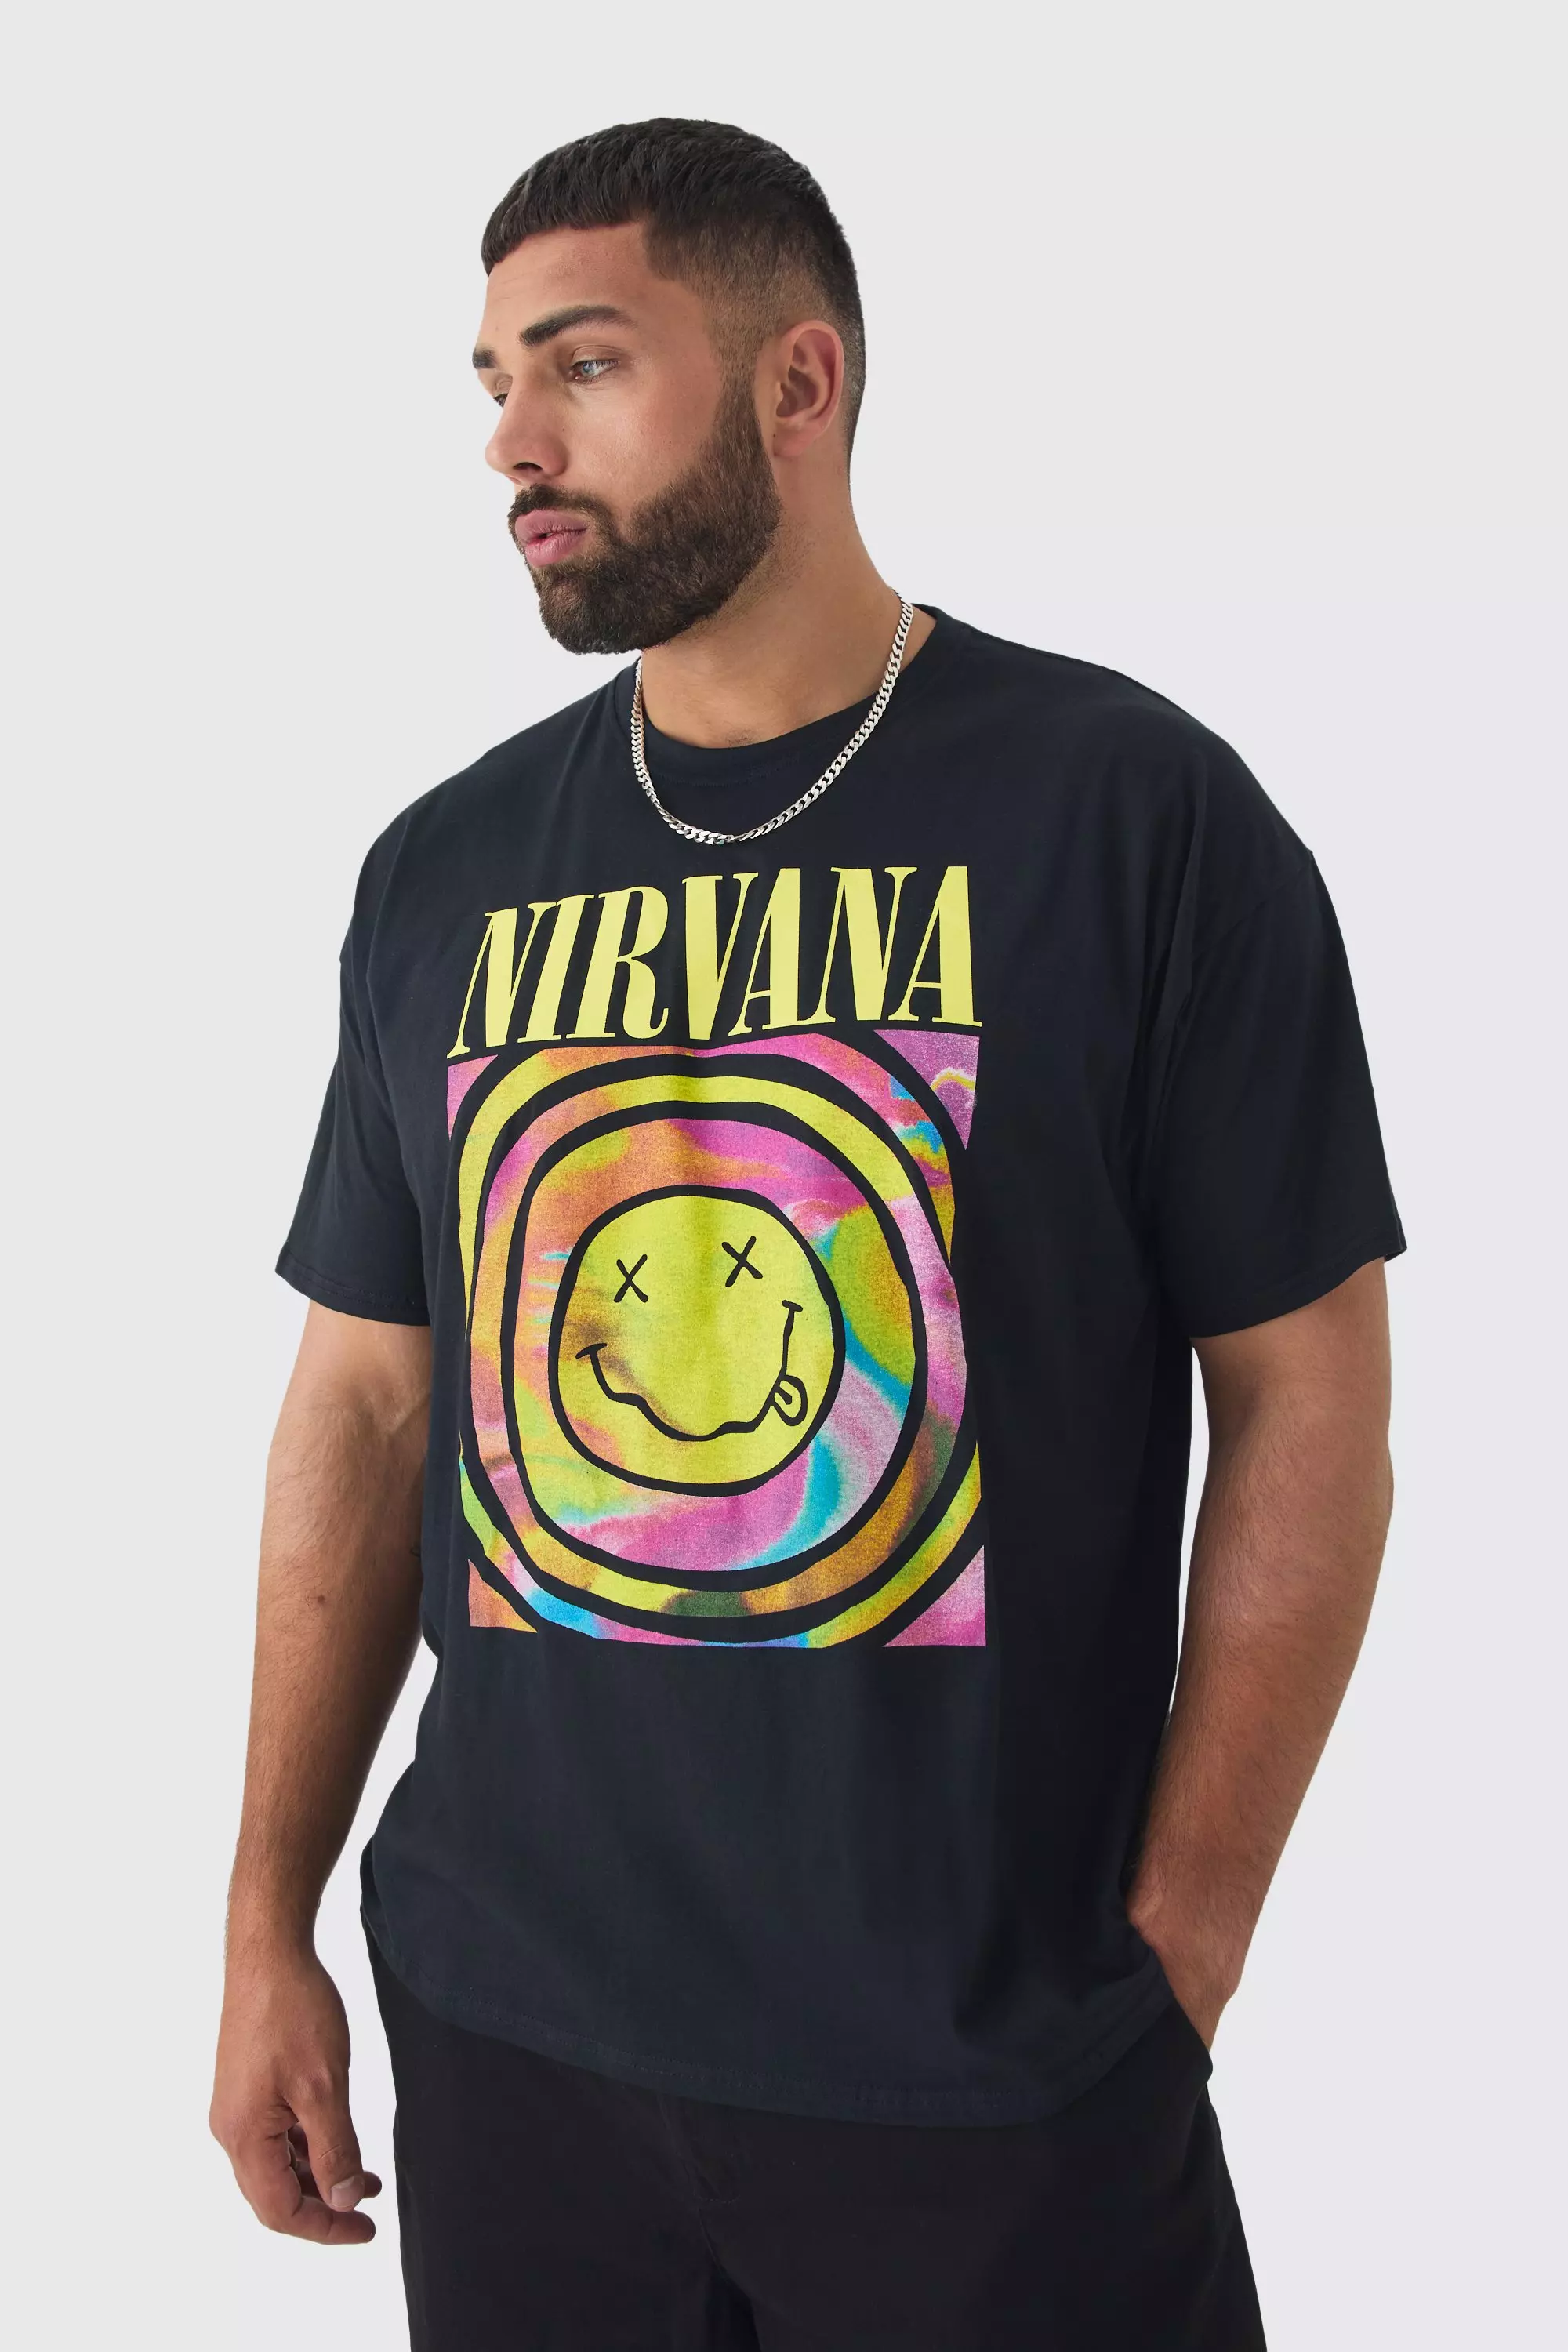 Plus Nirvana Smiley License T-shirt Black